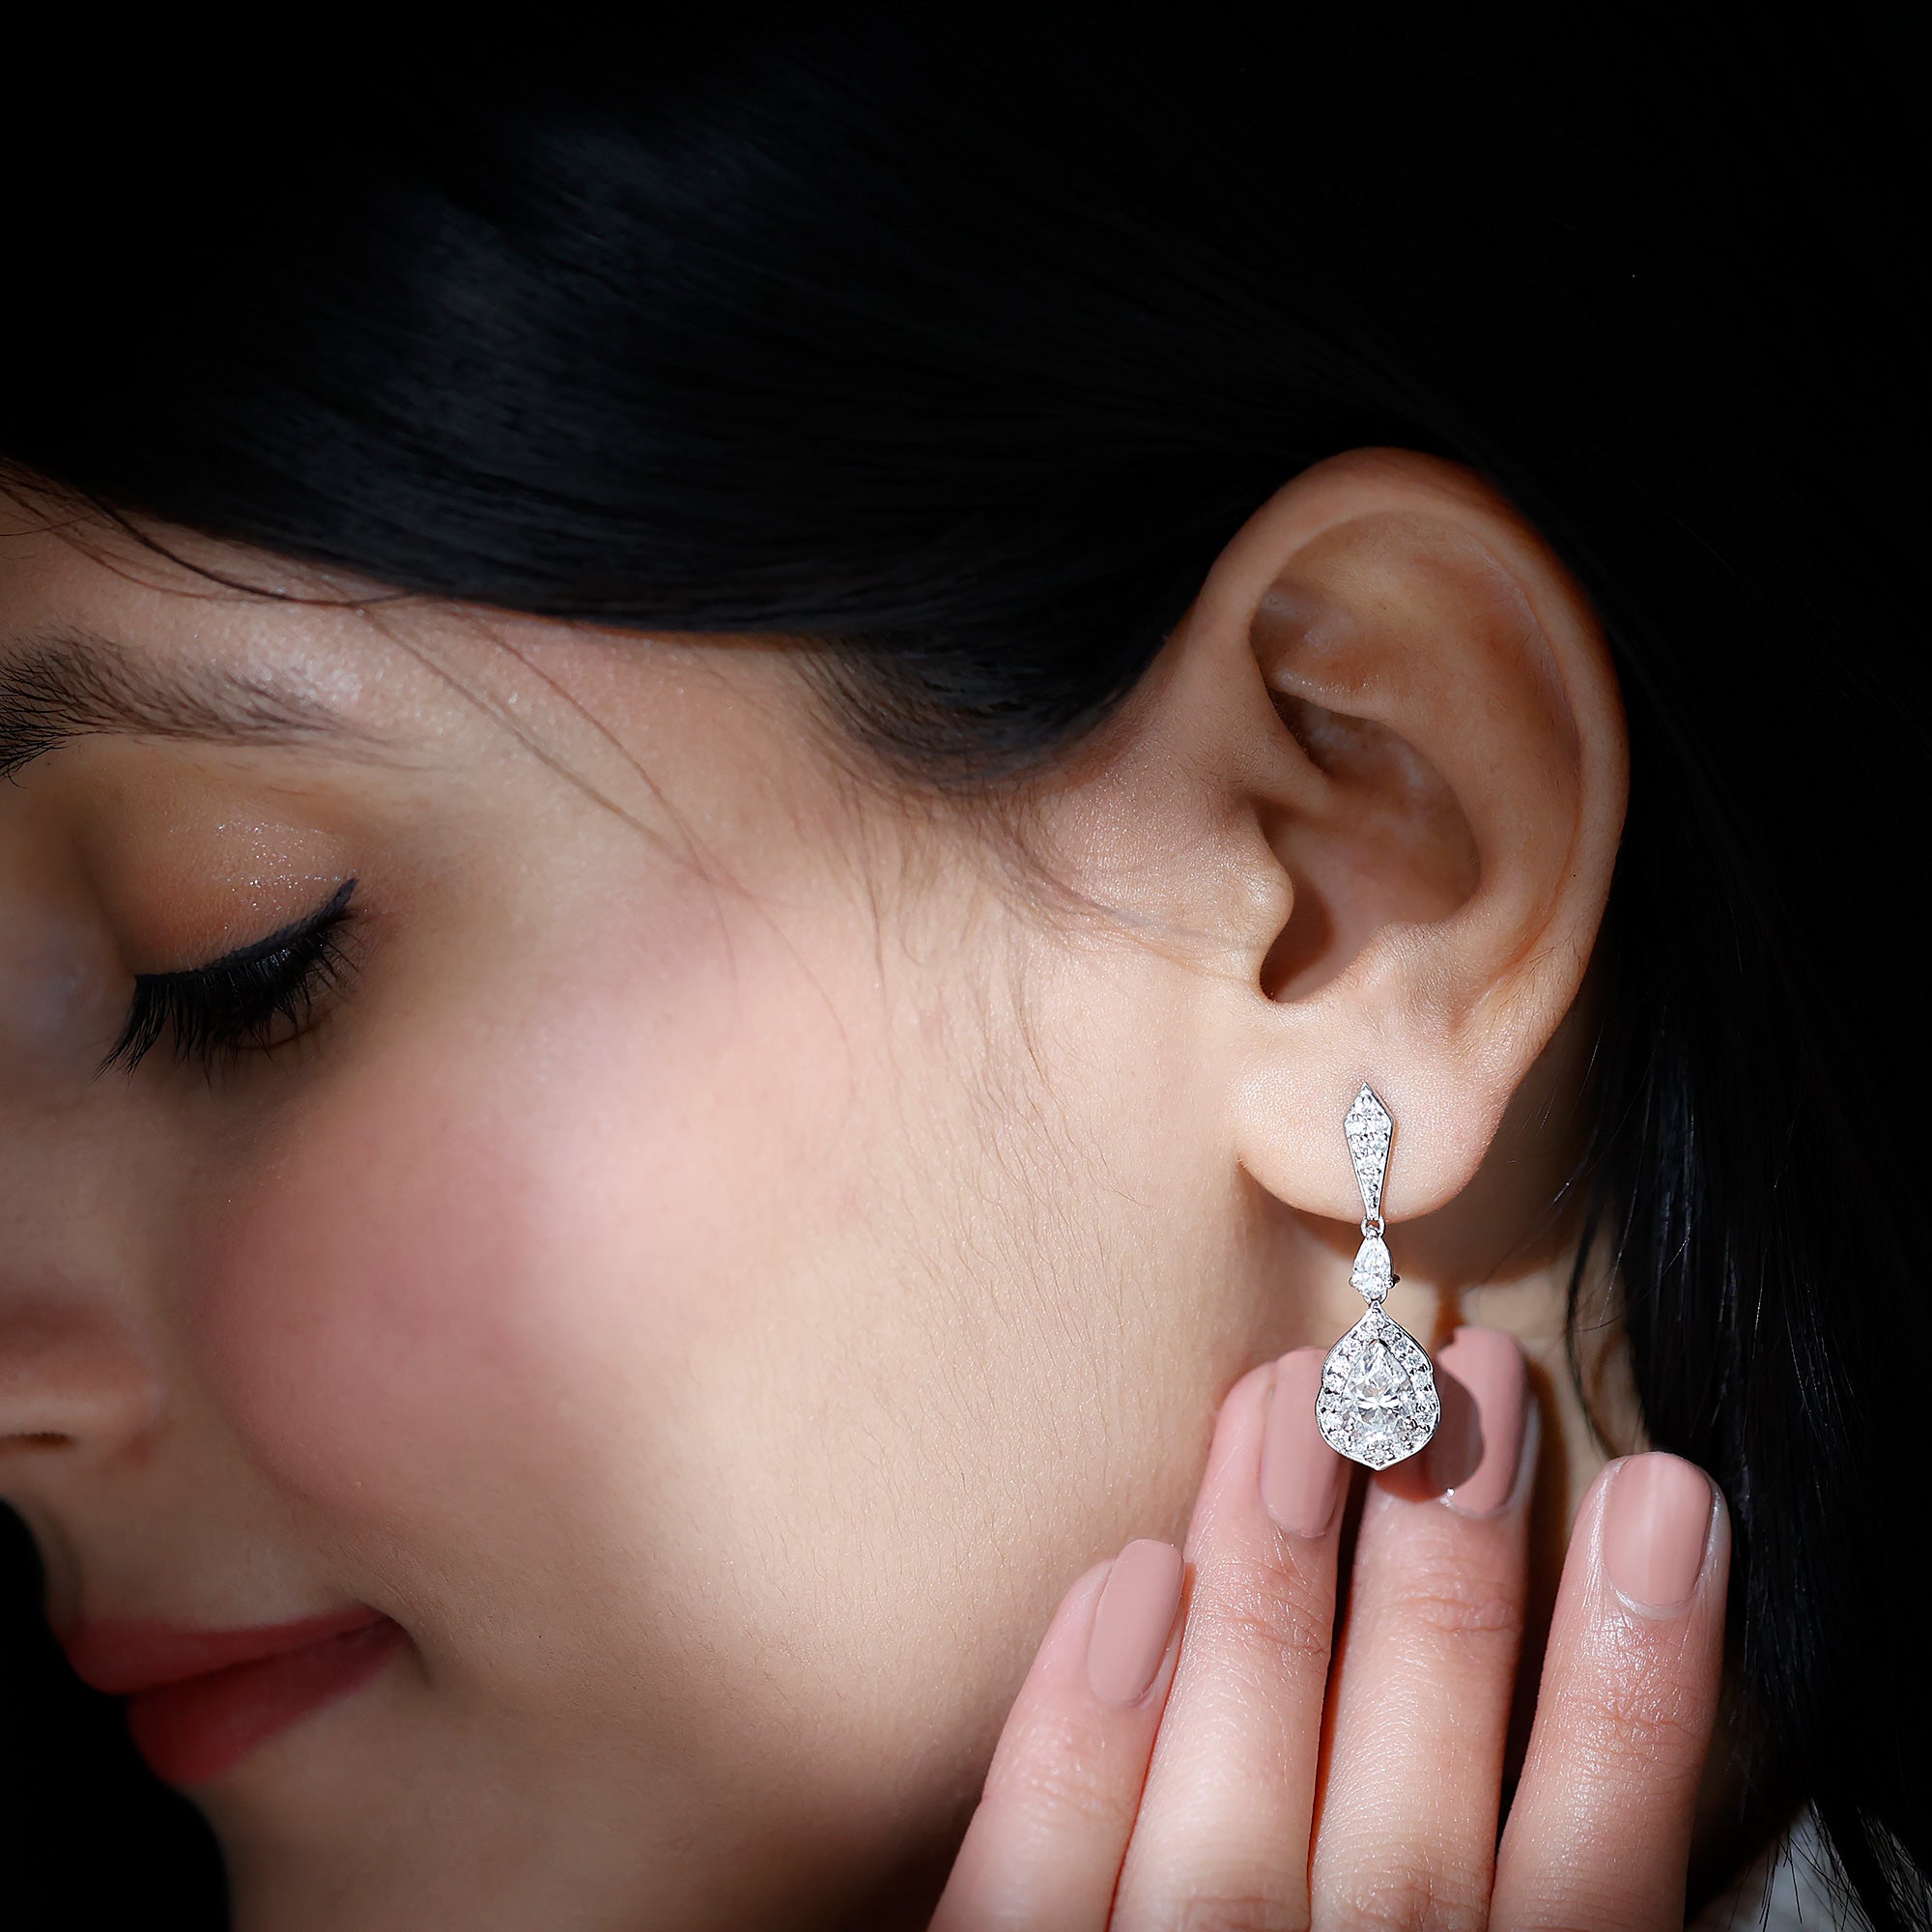 Sparkanite Jewels-Vintage Style Moissanite Teardrop Earrings